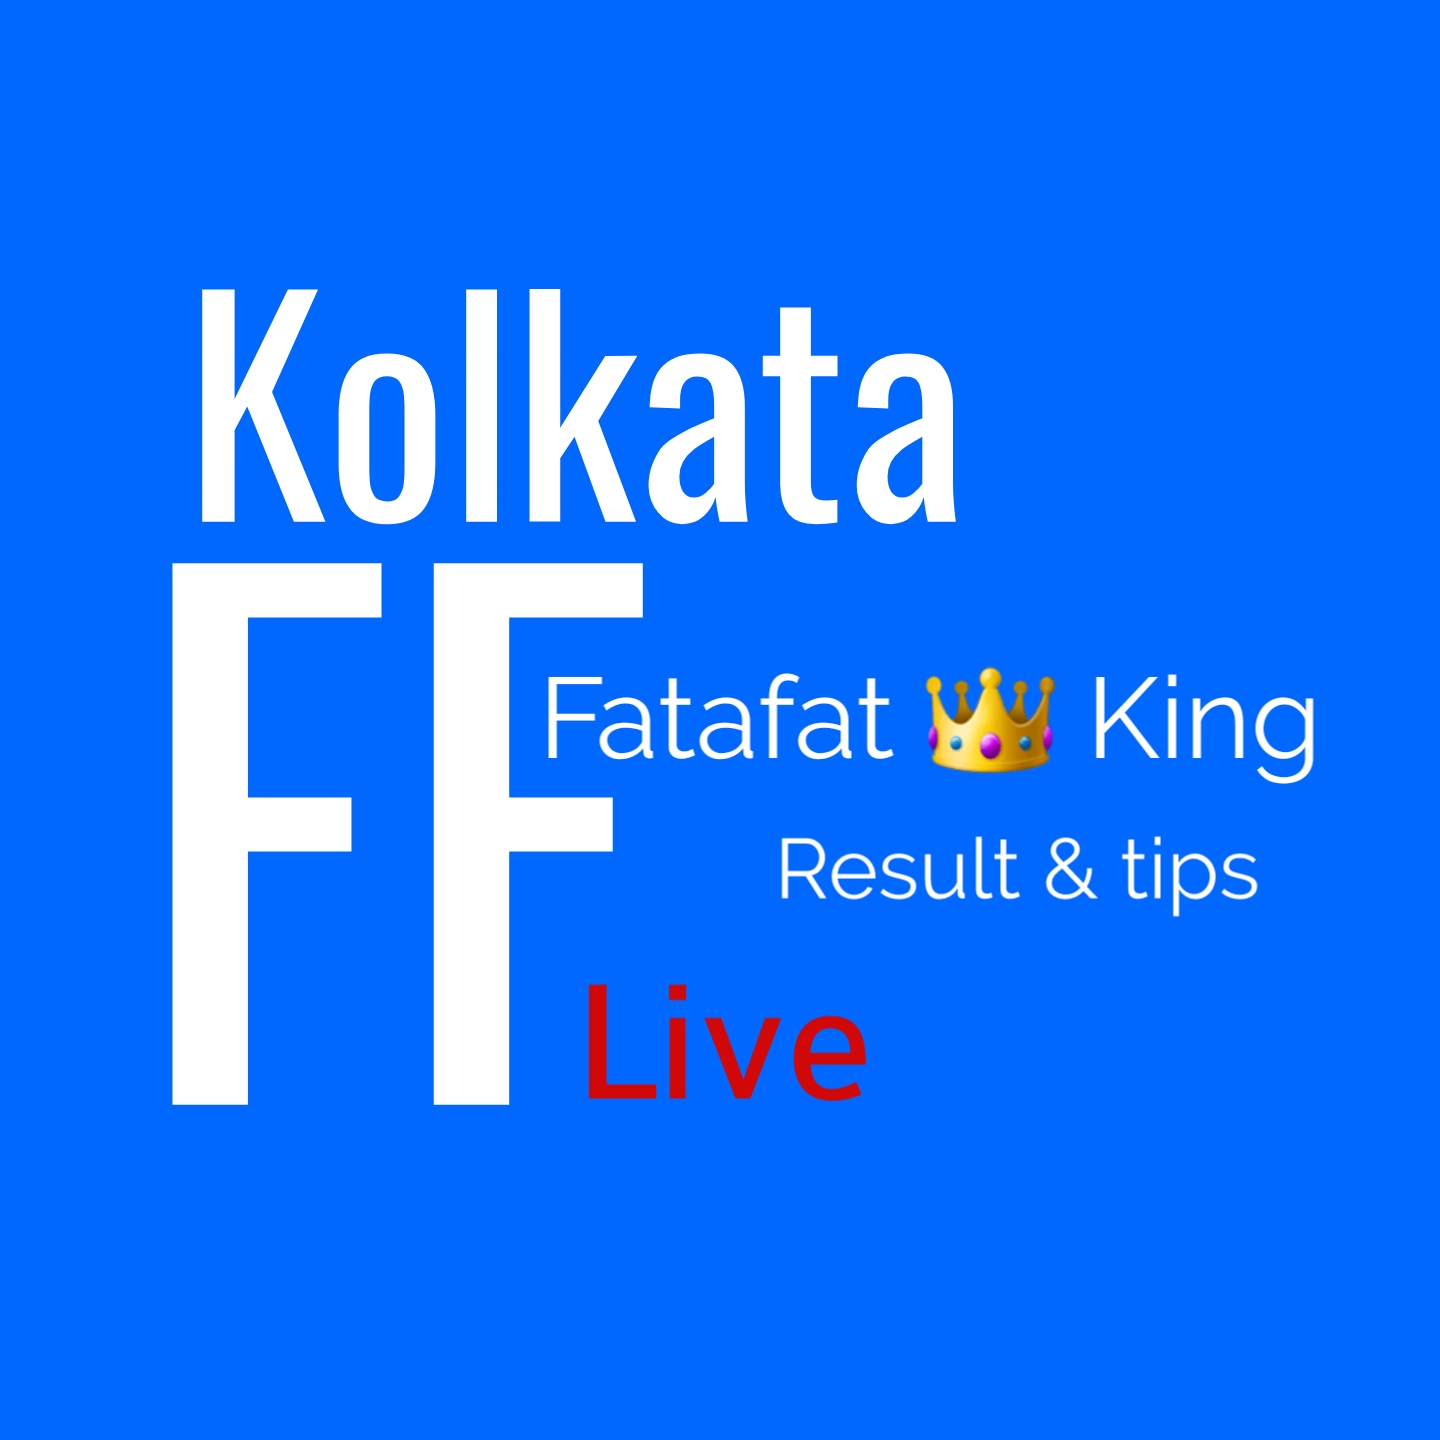 Kolkata ff